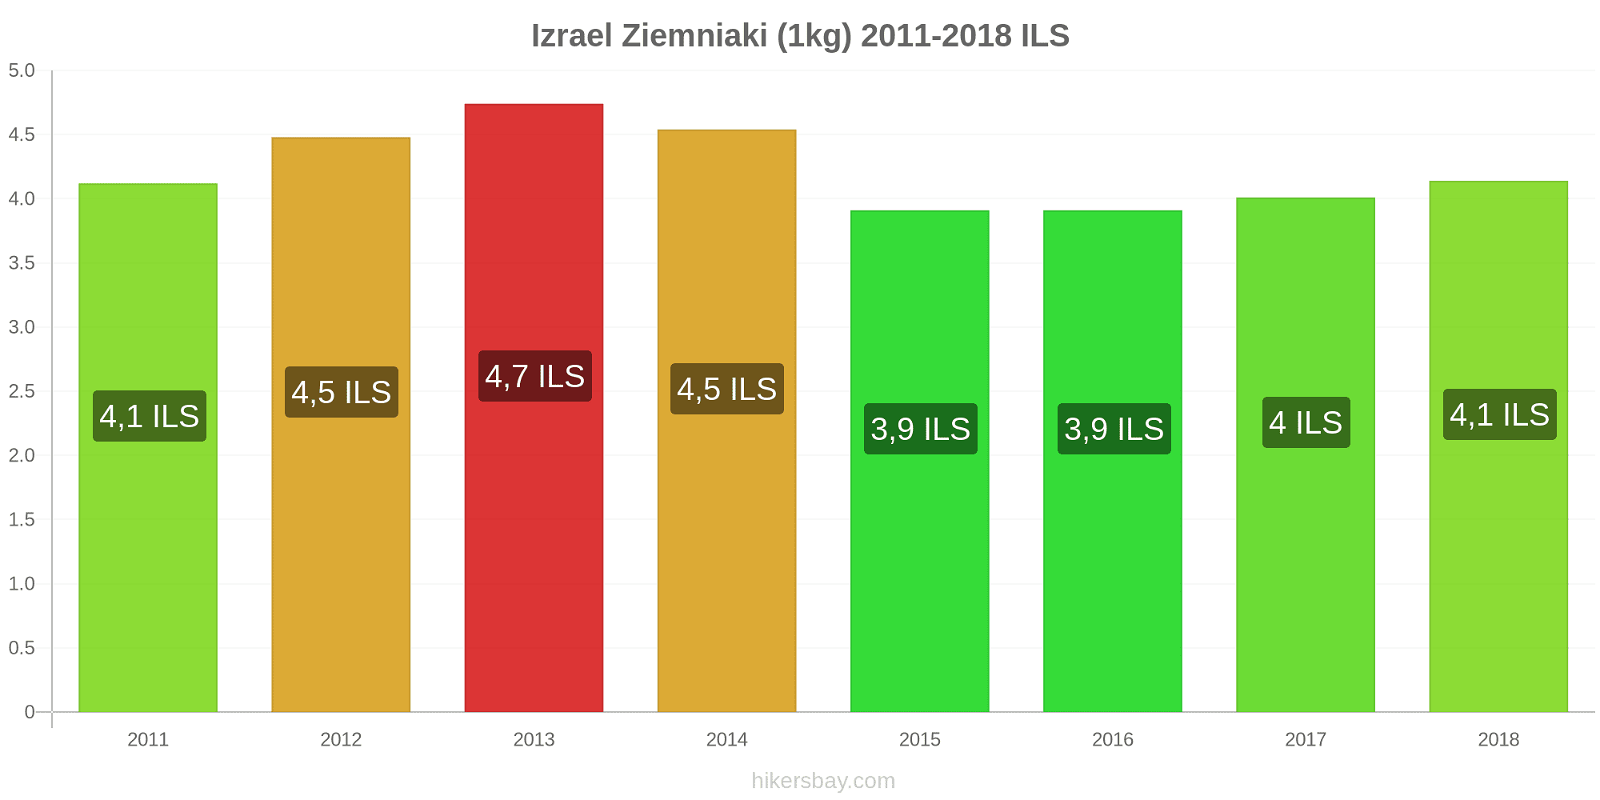 Izrael zmiany cen Ziemniaki (1kg) hikersbay.com